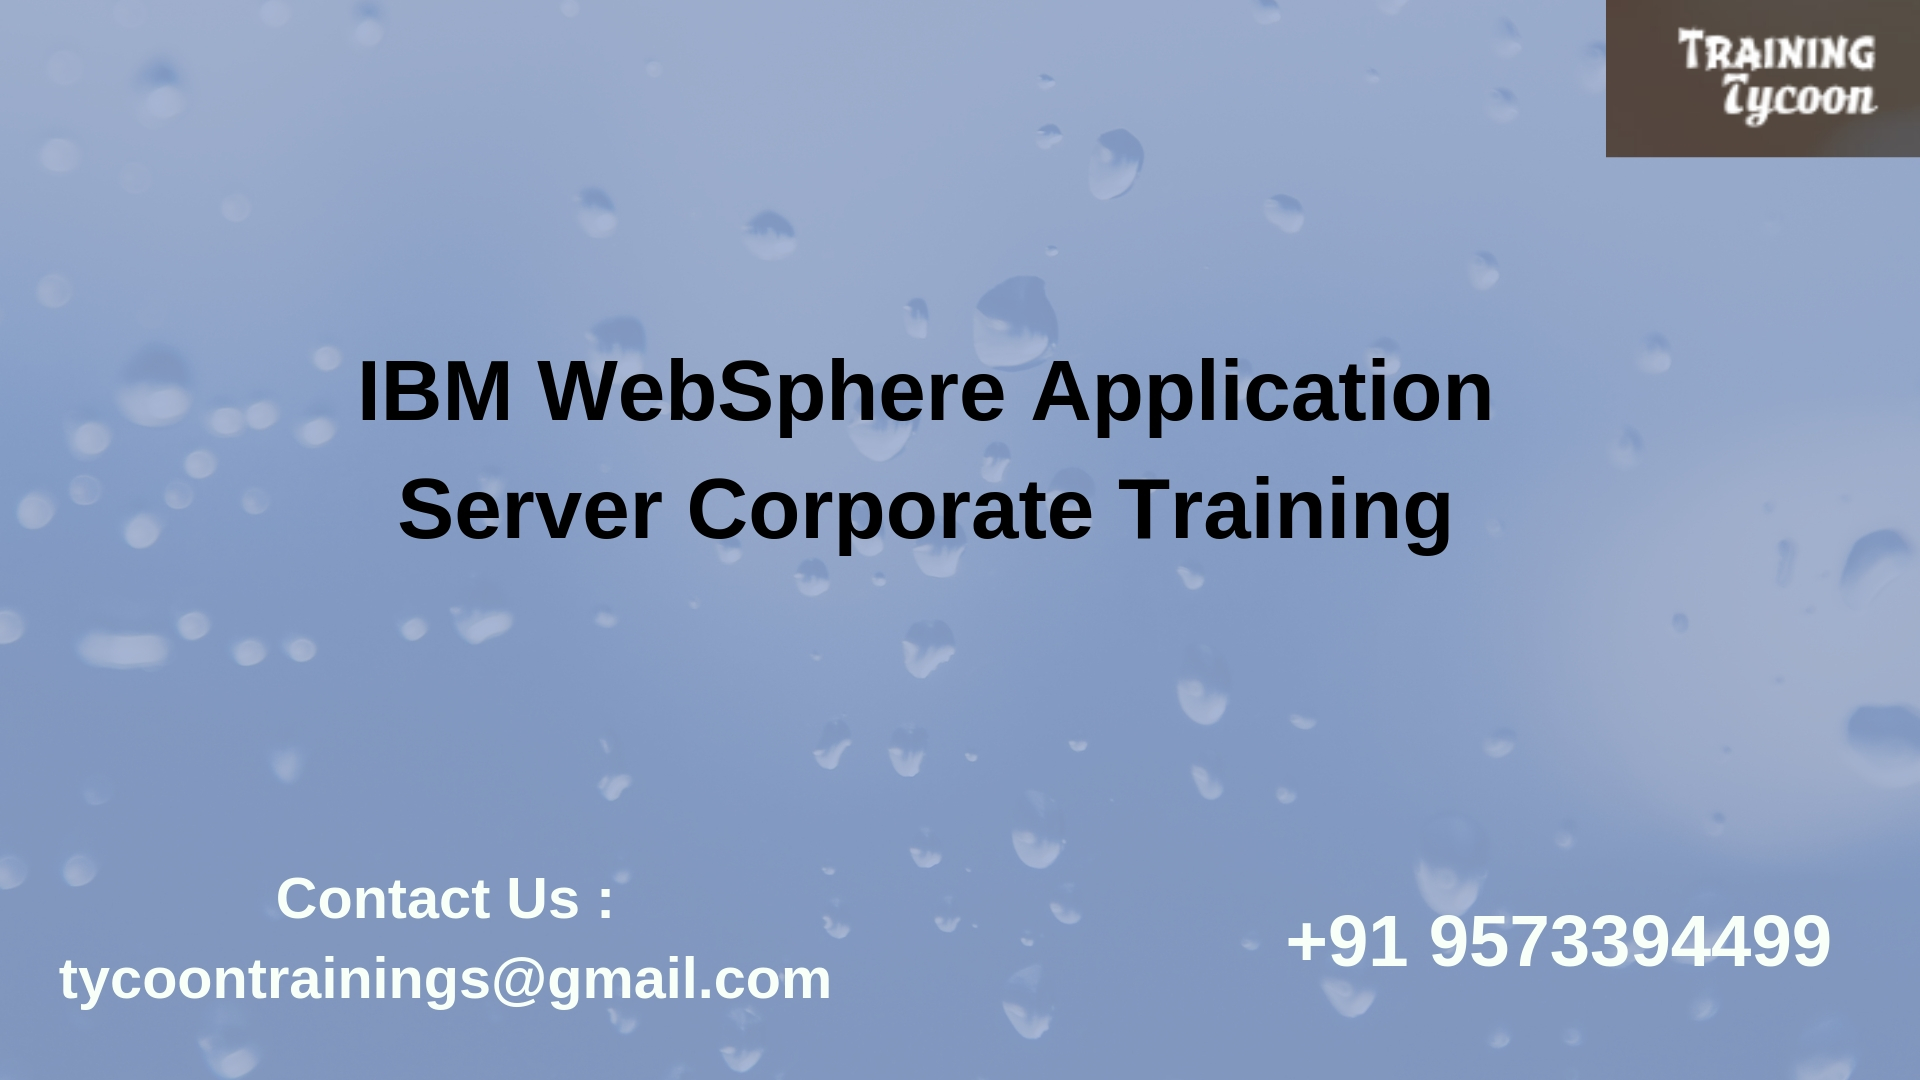 IBM WebSphere Application Server Corporate Training - Training Tycoon, Hyderabad, Andhra Pradesh, India